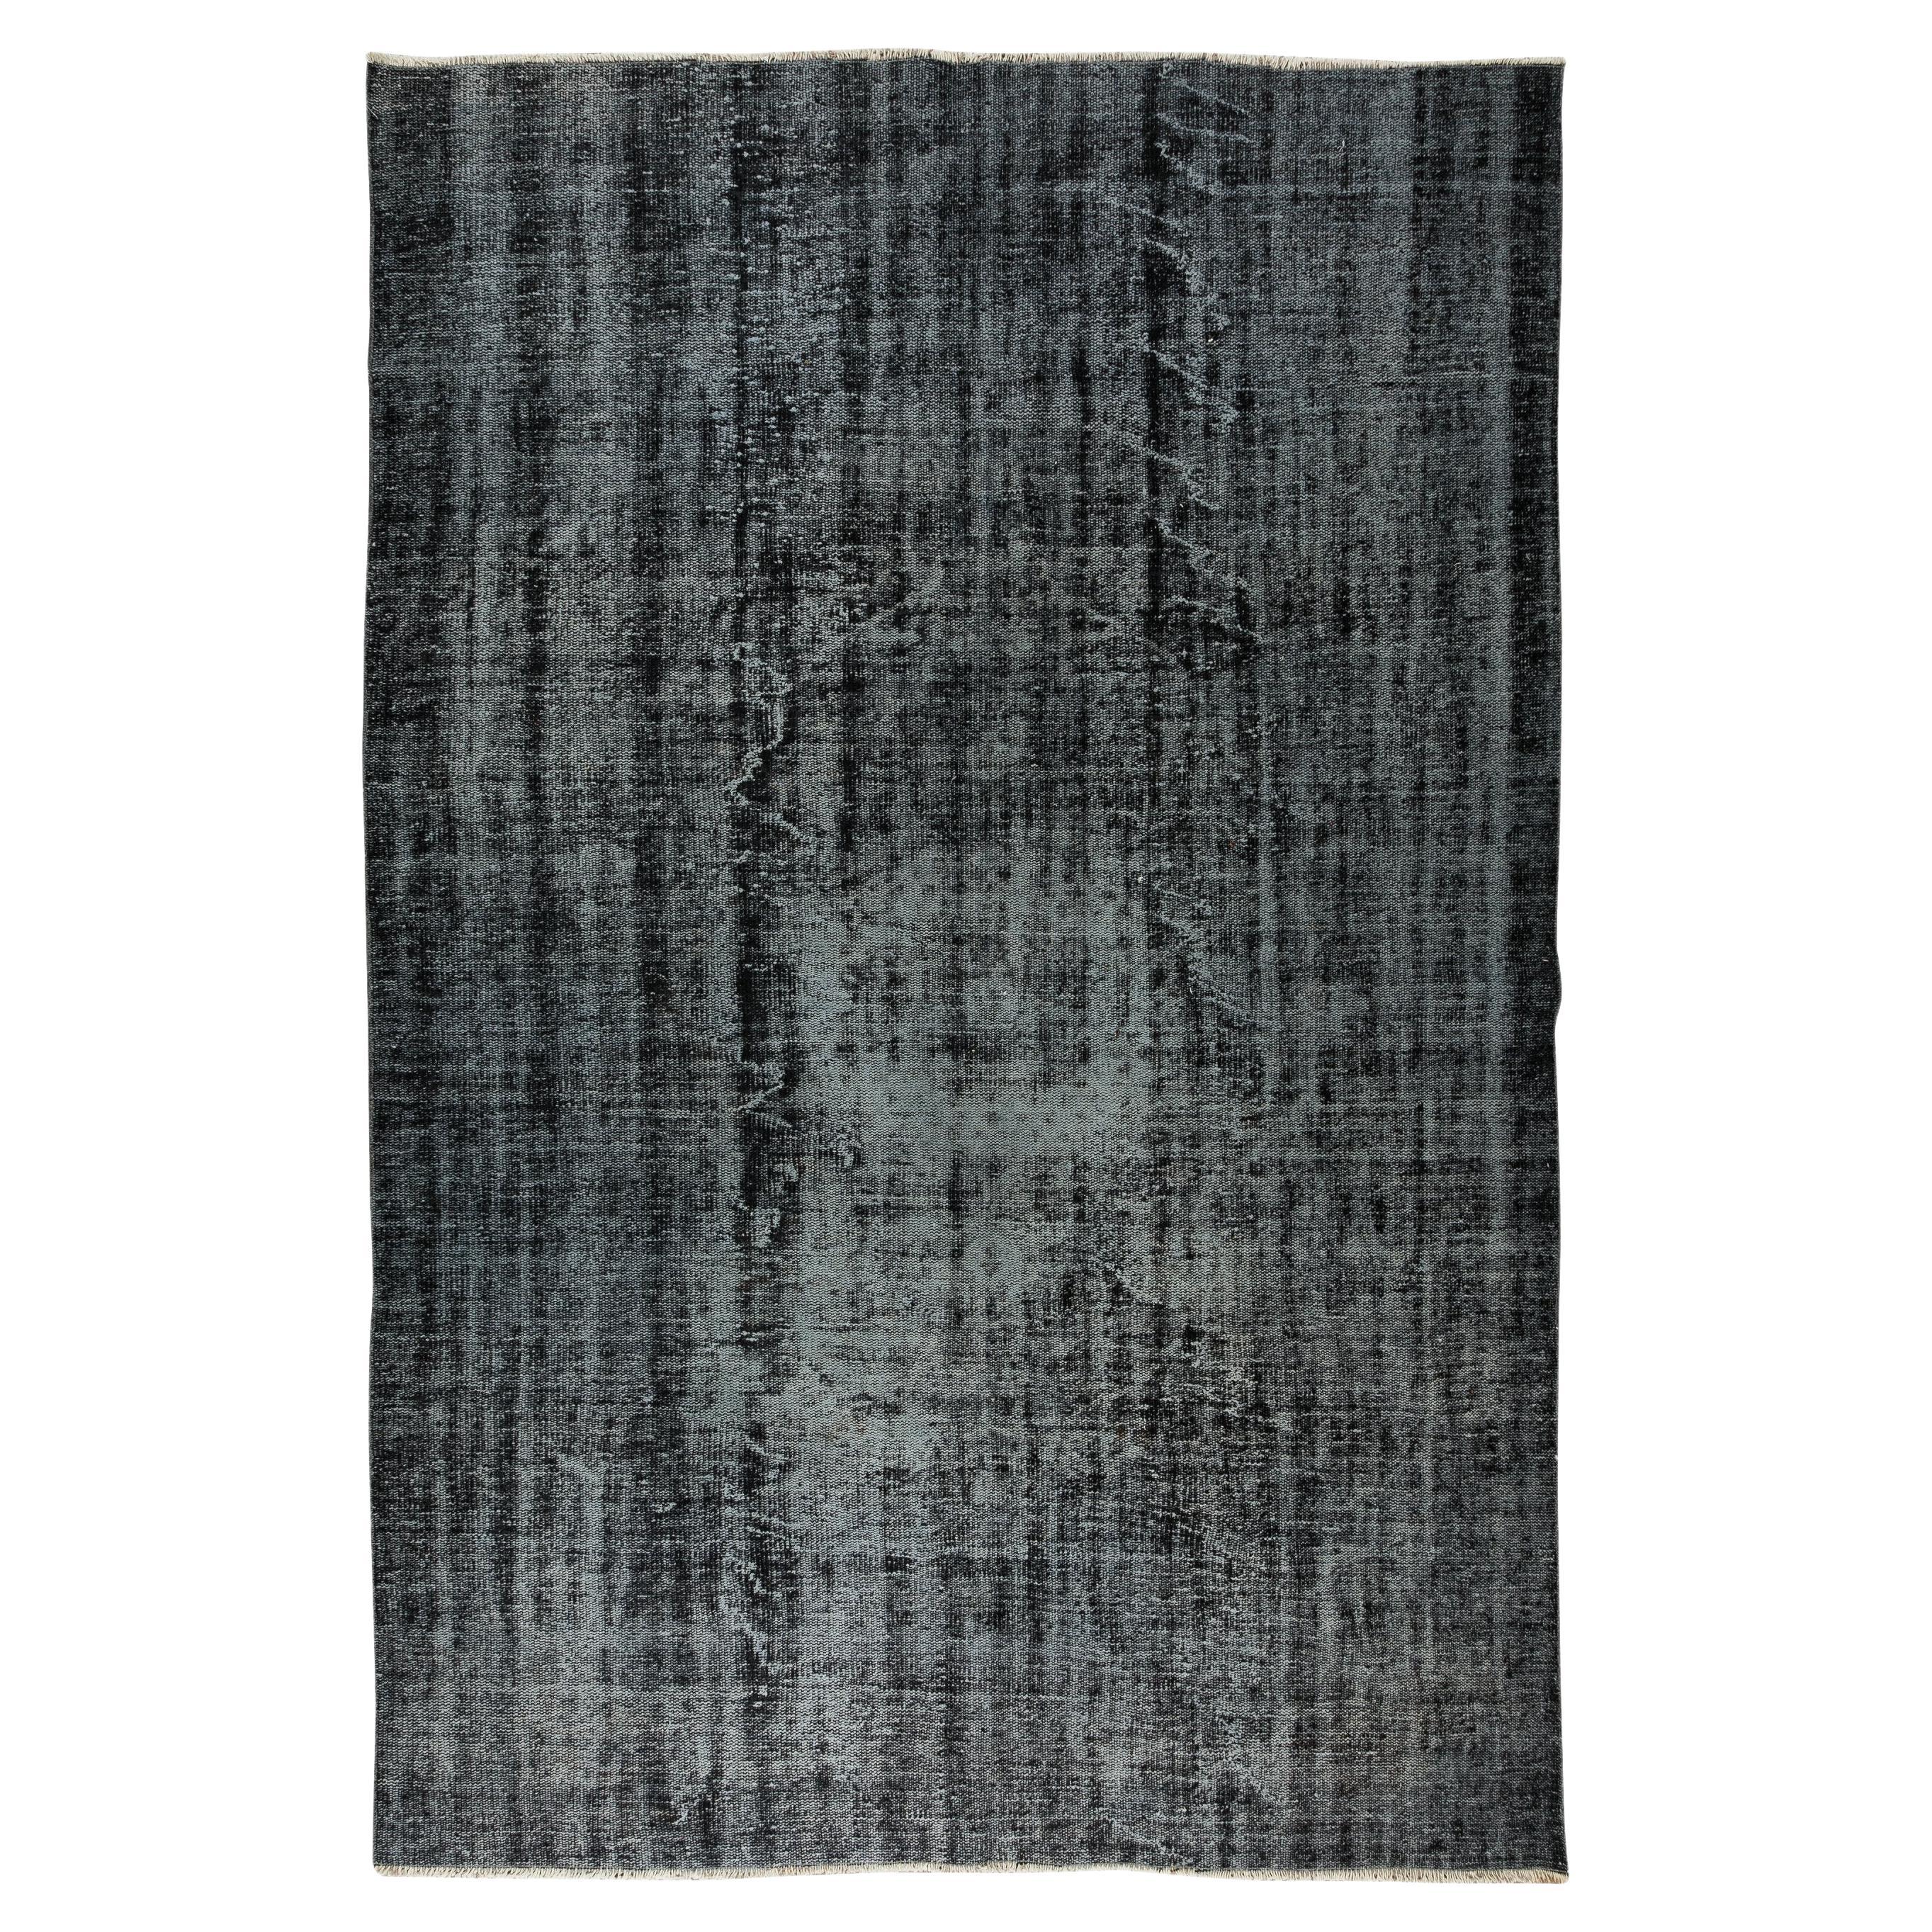 6.8x10 Ft Handmade Turkish Rug in Black for Modern Homes. Vintage Wool Carpet